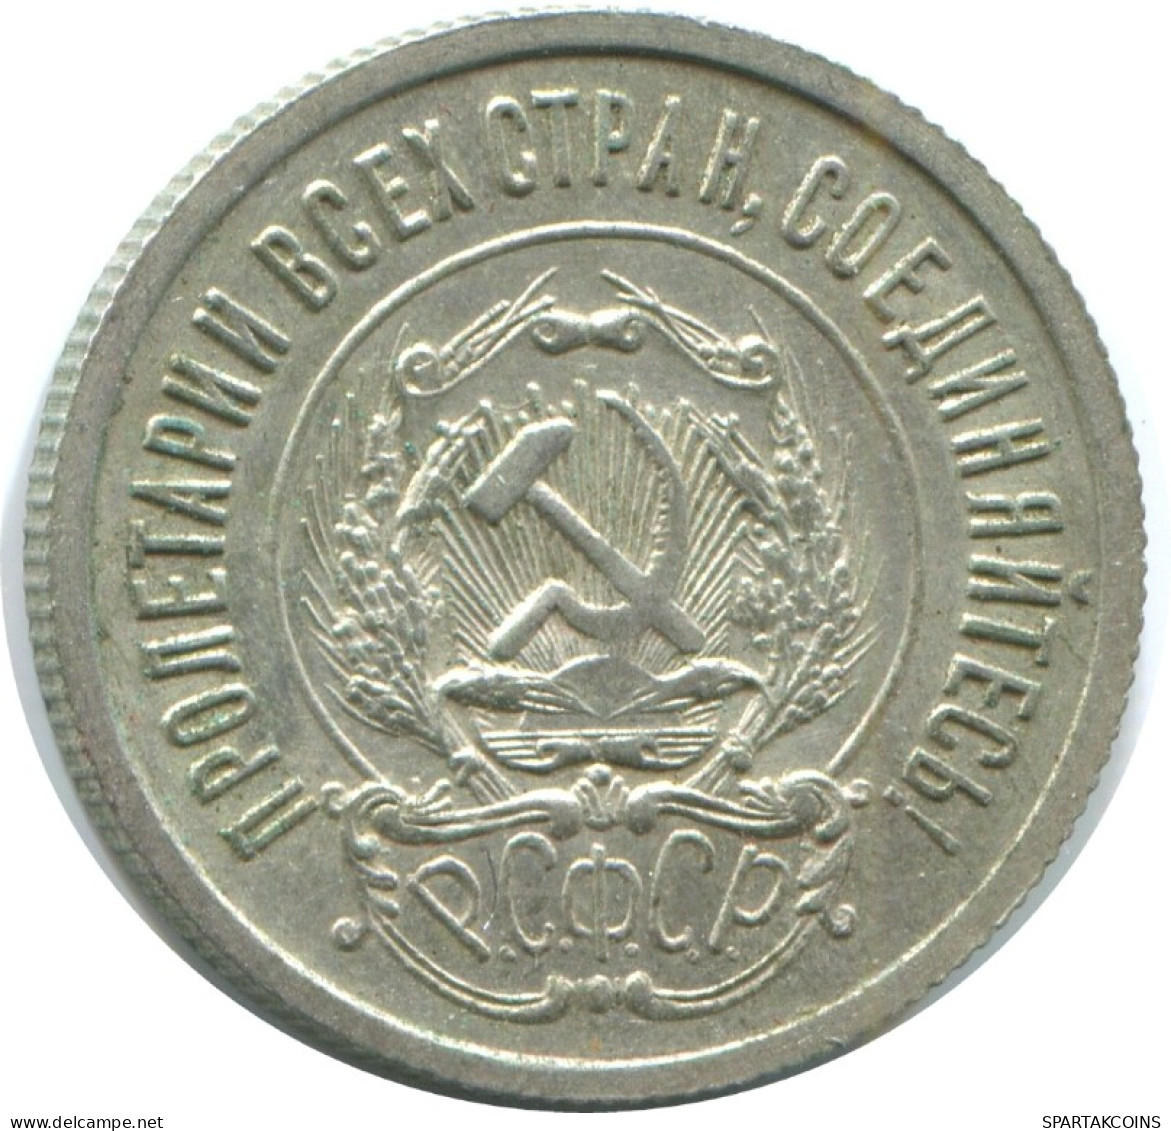 20 KOPEKS 1923 RUSSIA RSFSR SILVER Coin HIGH GRADE #AF591.4.U.A - Rusia